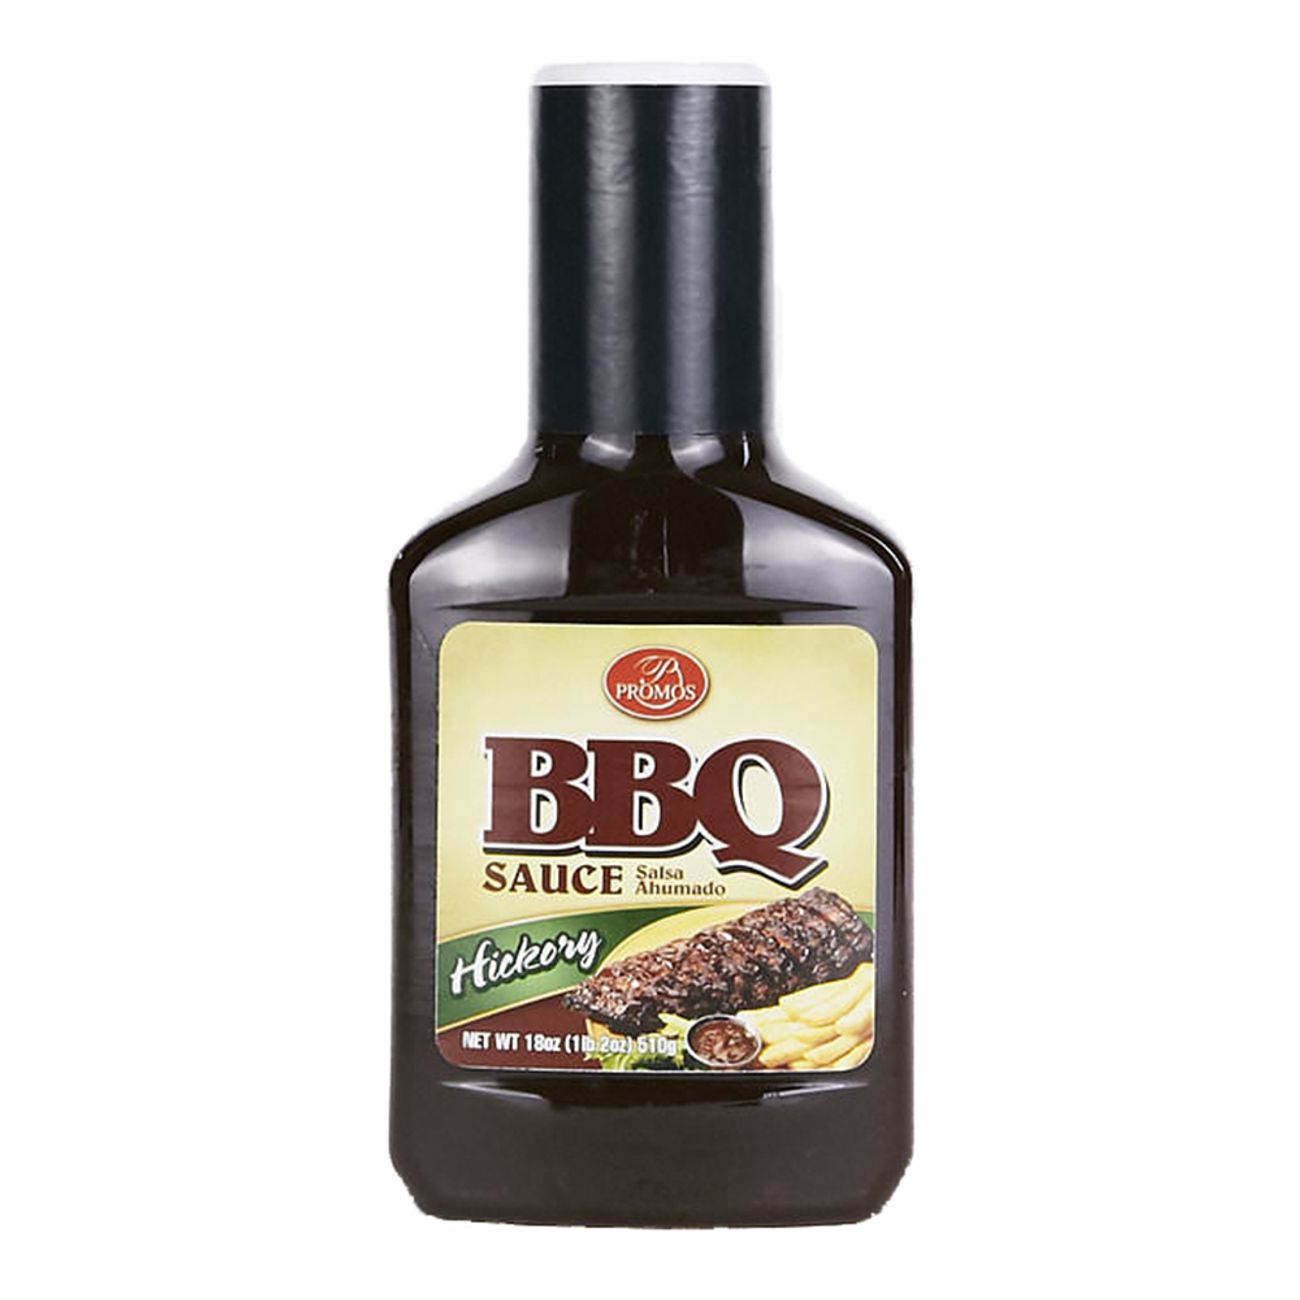 promos-bbq-sauce-hickory-1